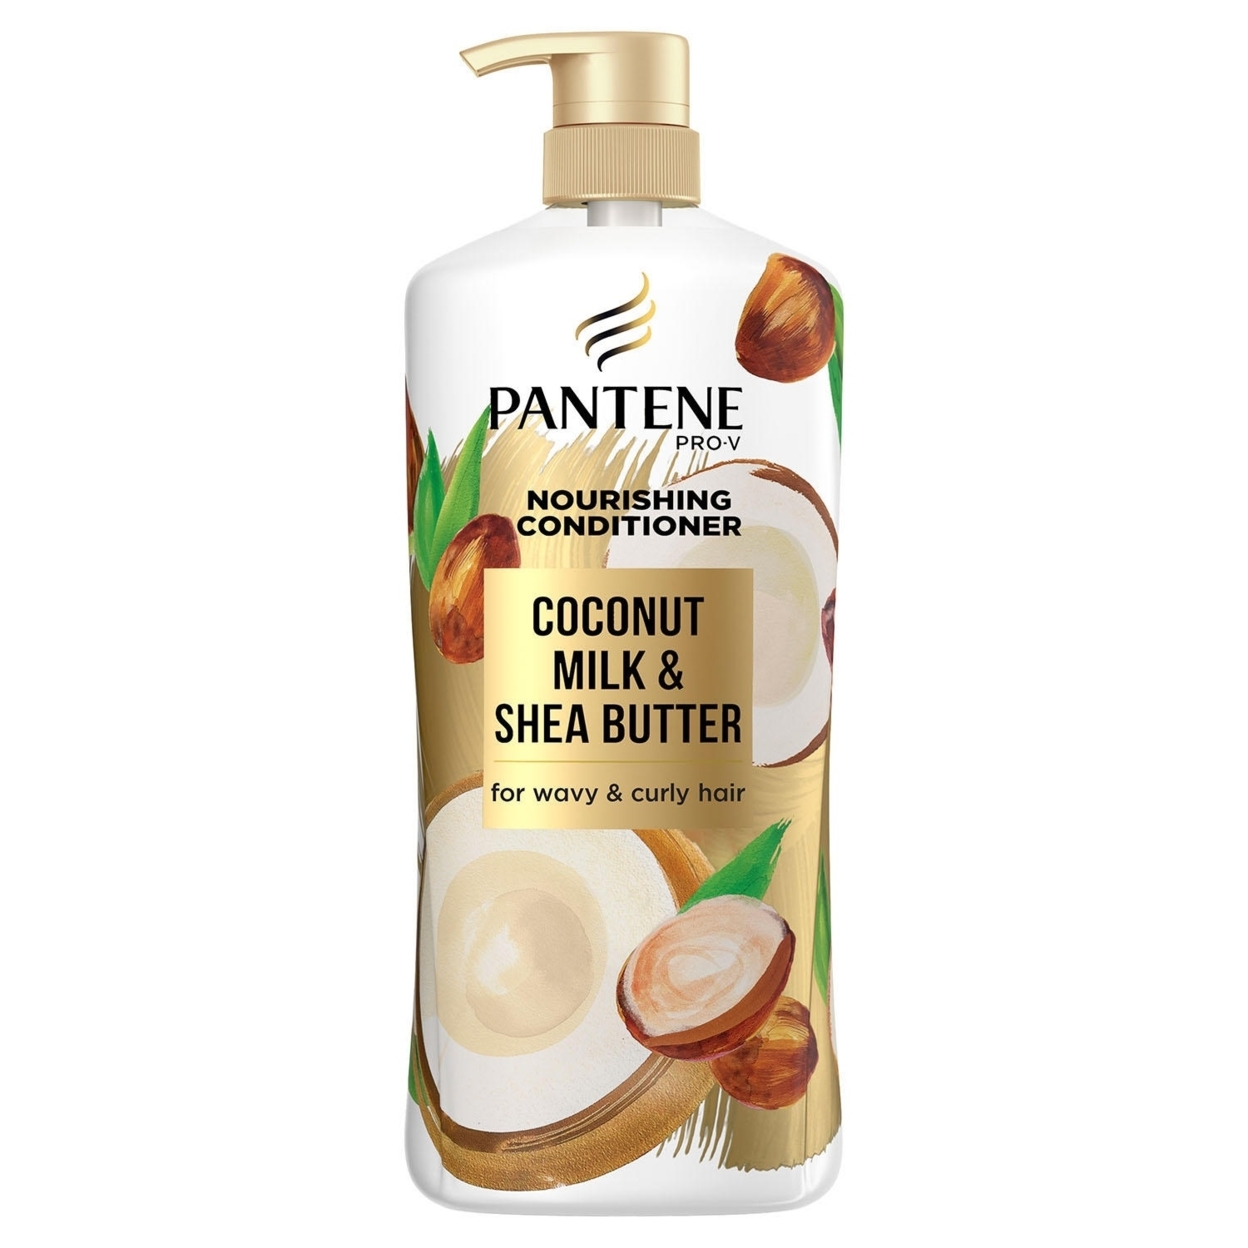 Pantene Pro-V Nourishing Conditioner, Coconut Milk & Shea Butter (38.2 Fl Oz)